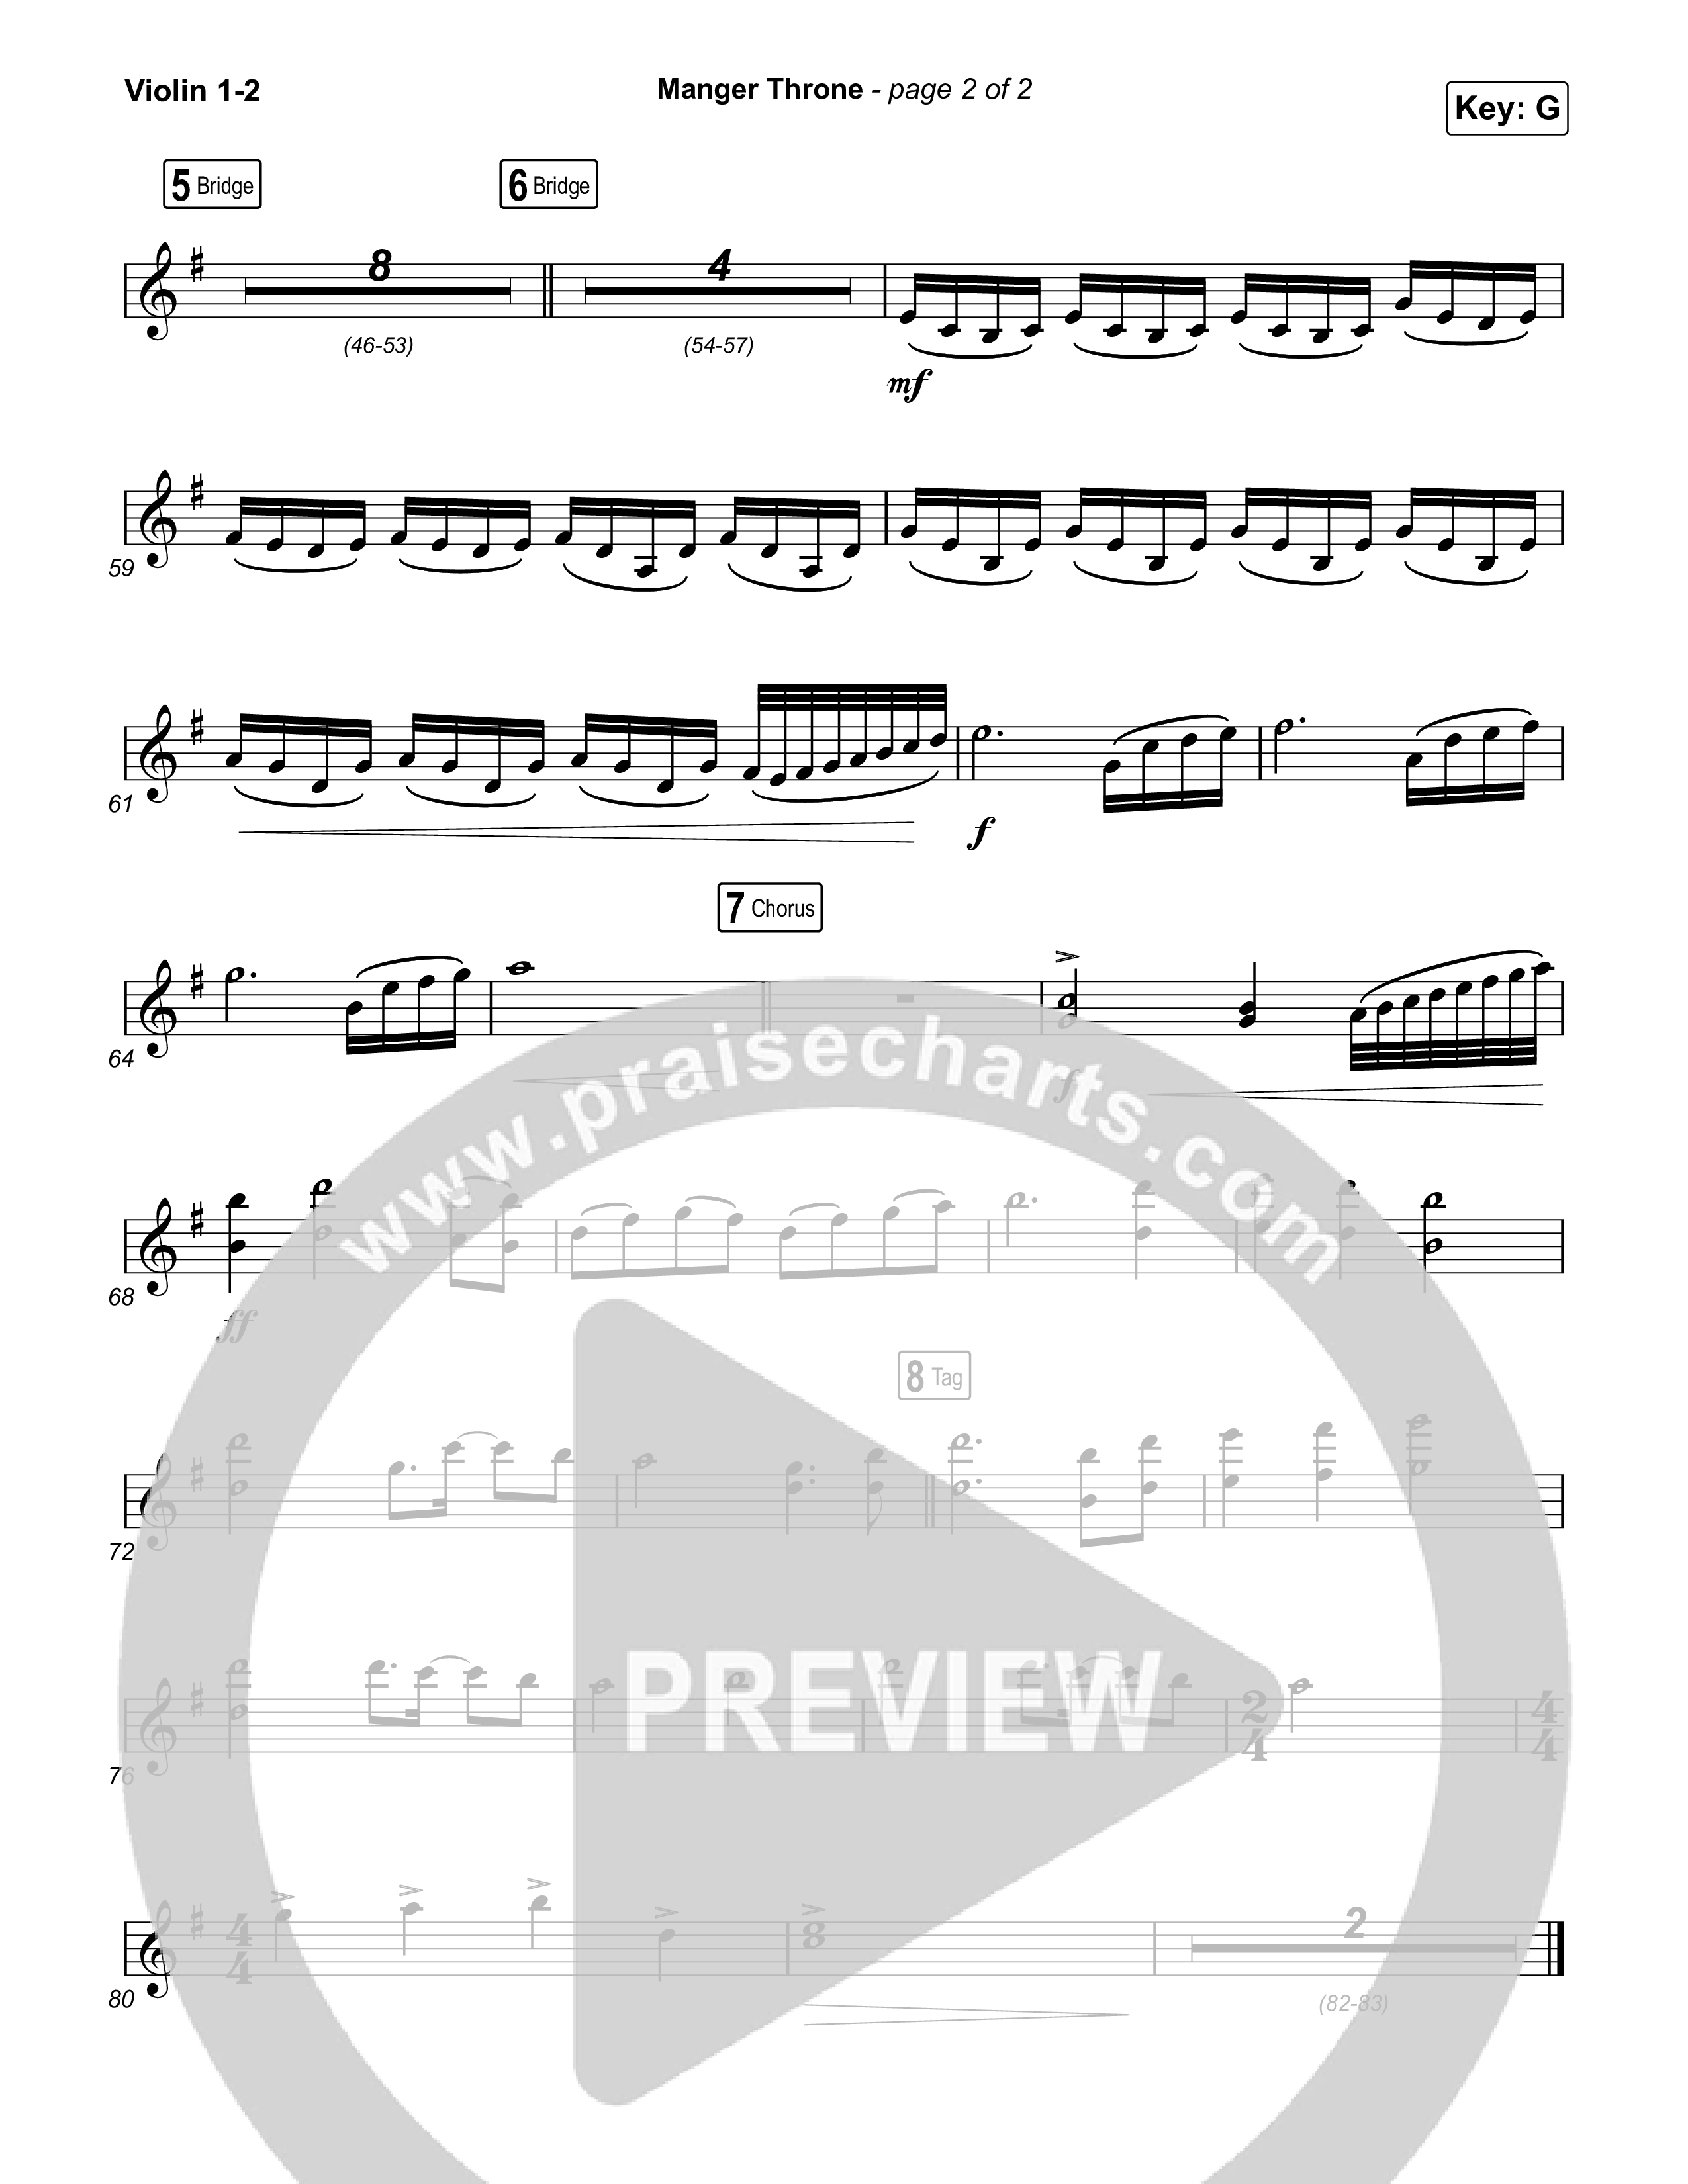 Manger Throne (Choral Anthem SATB) String Pack (Phil Wickham / Arr. Erik Foster)